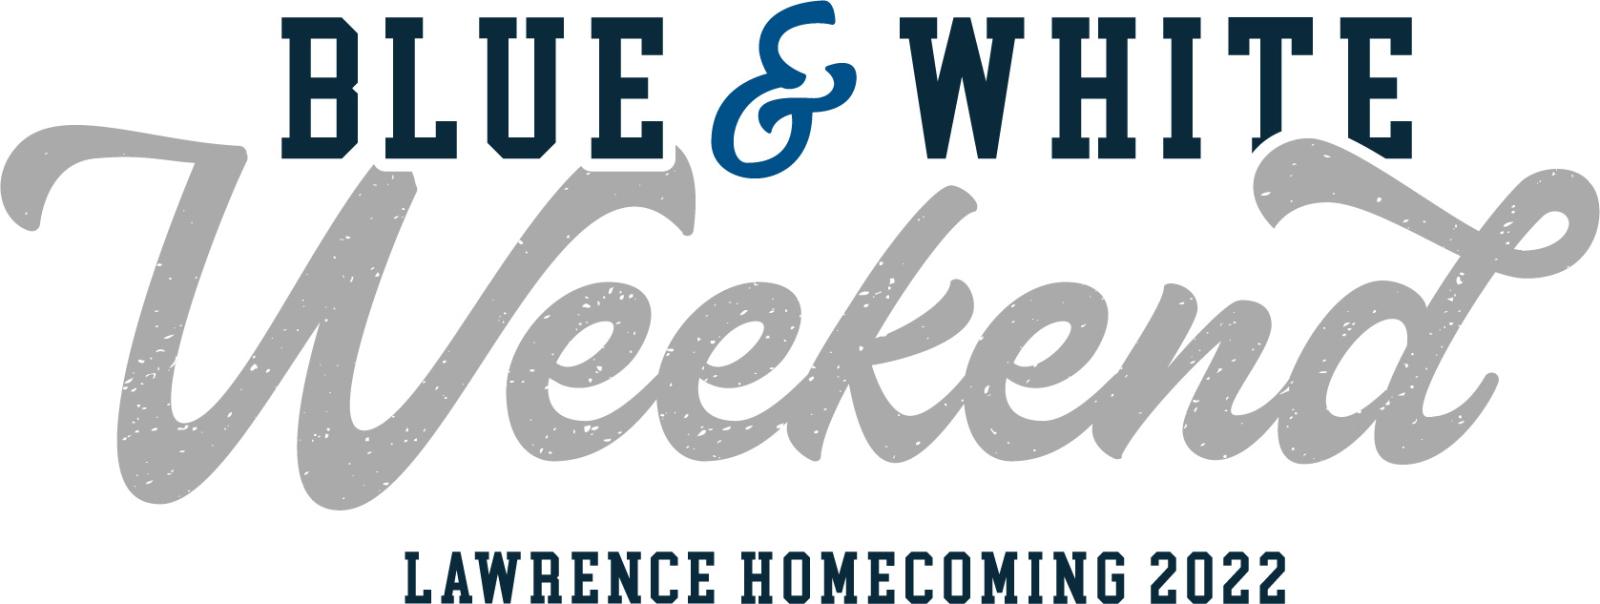 Blue & White Weekend logo